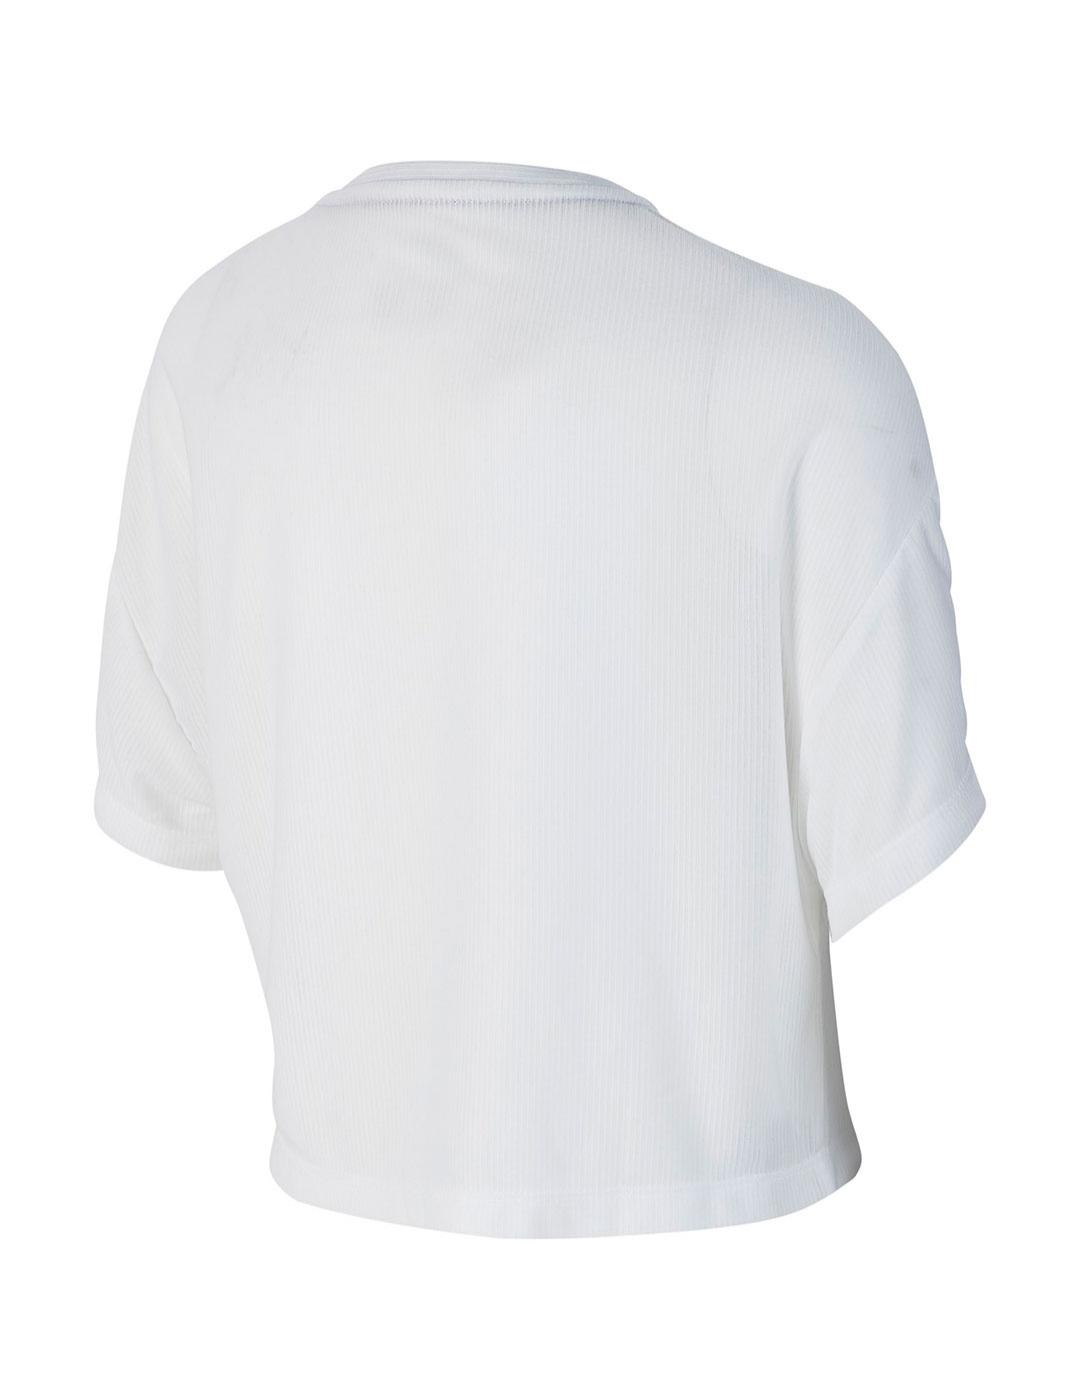 Camiseta Niña Nike Top Blanco/Negro